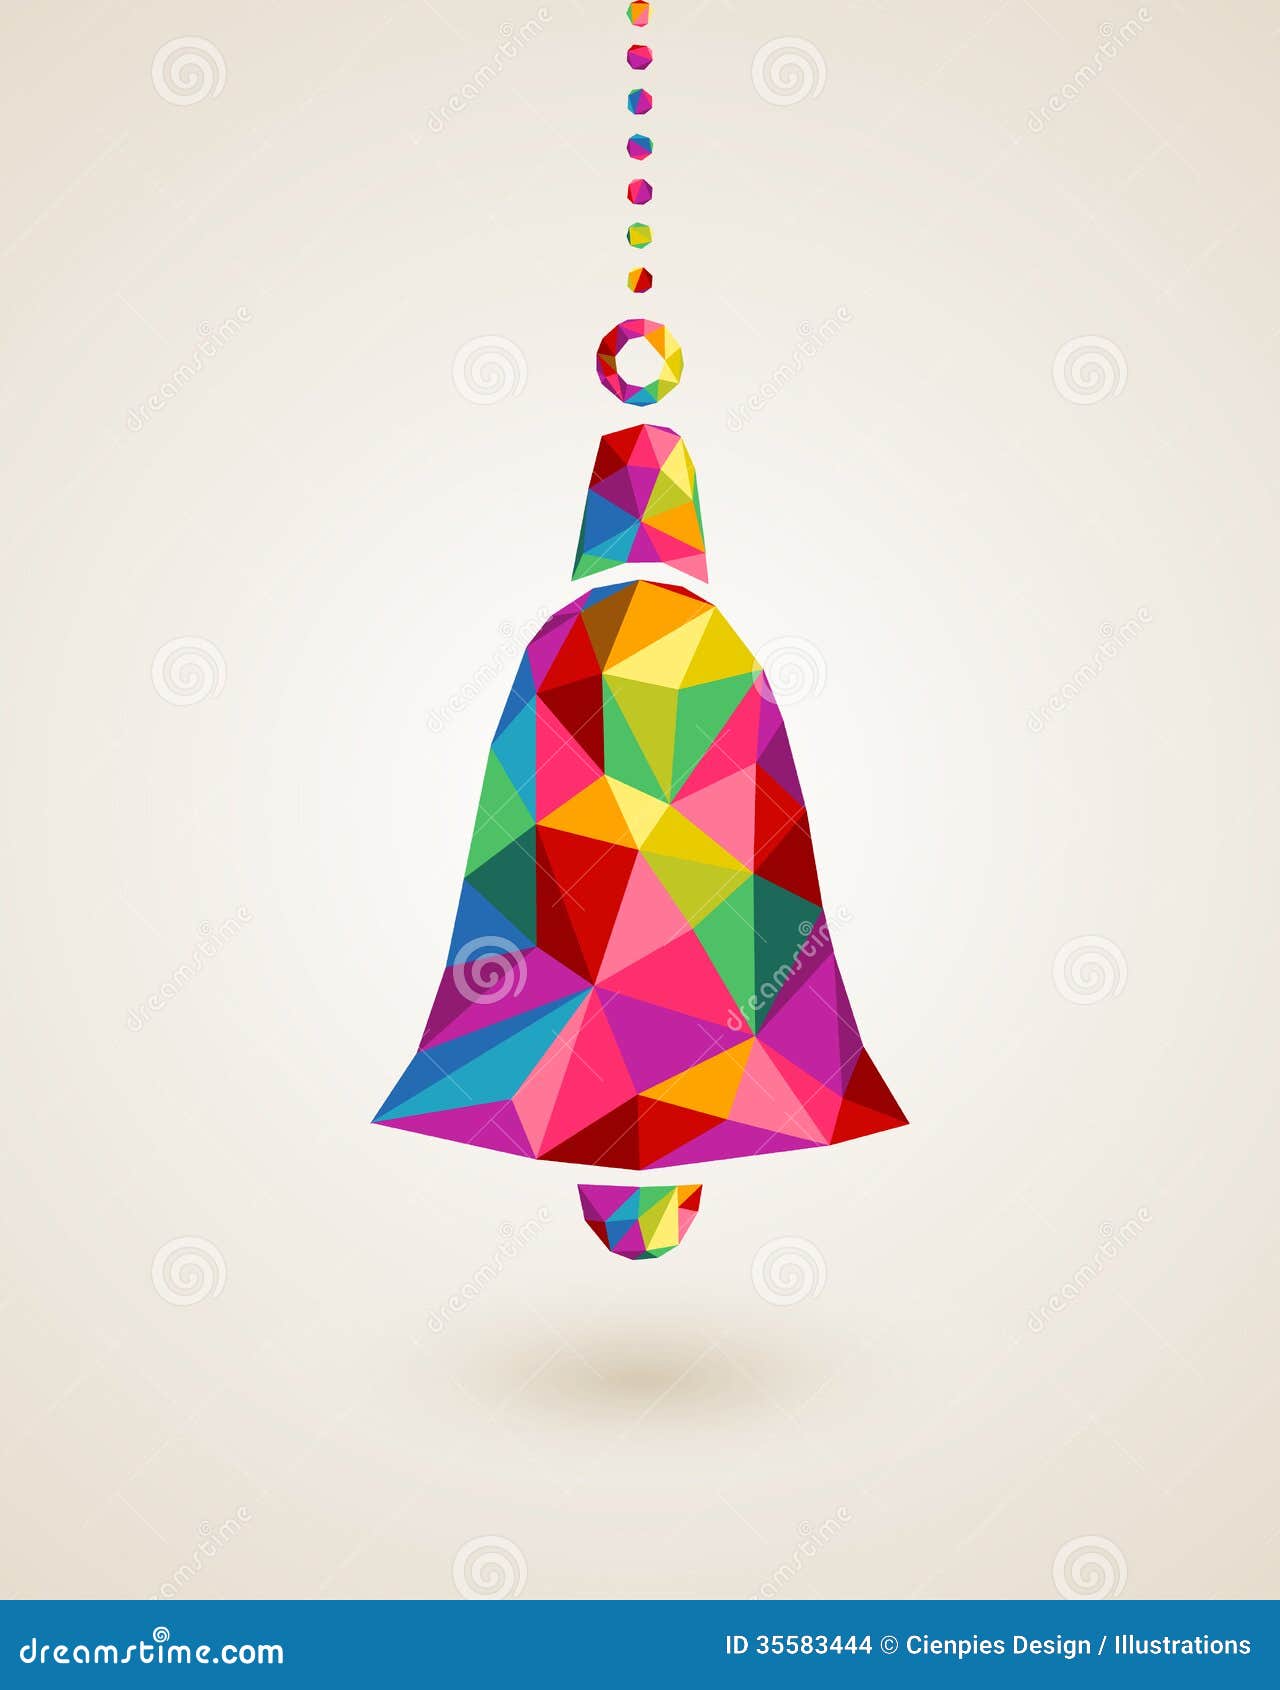 Hanging Bells Vector Art PNG, Hanging Bells Vector Design, Hanging,  Christmas 2020, Bells PNG Image For Free Download